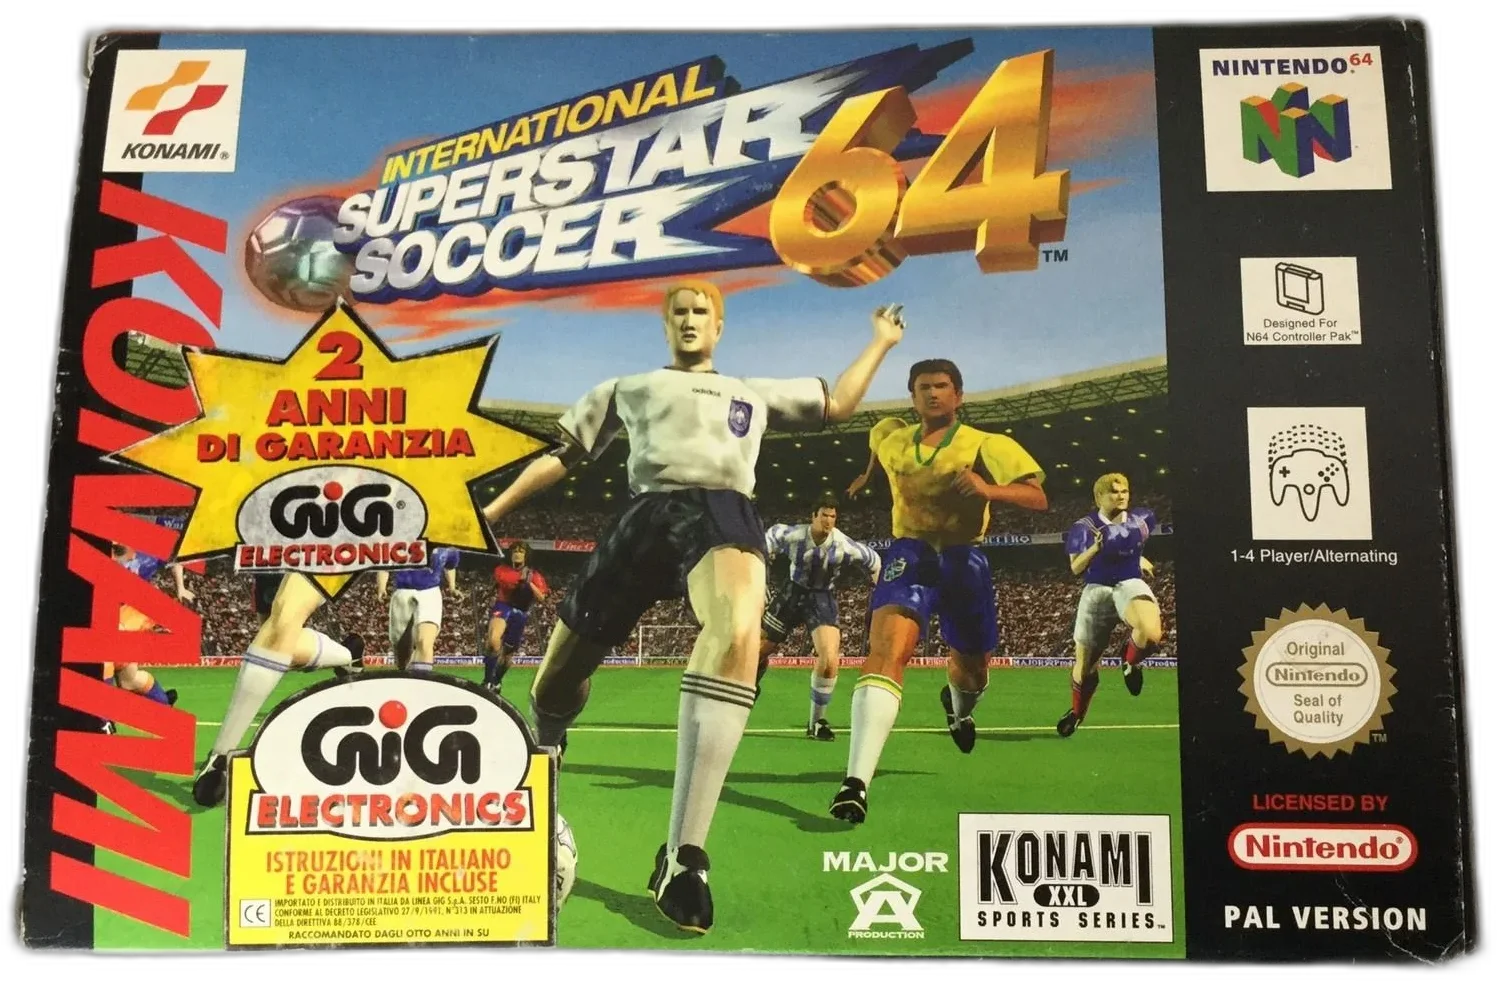  Nintendo 64 International Superstar Soccer 64 Bundle [IT]